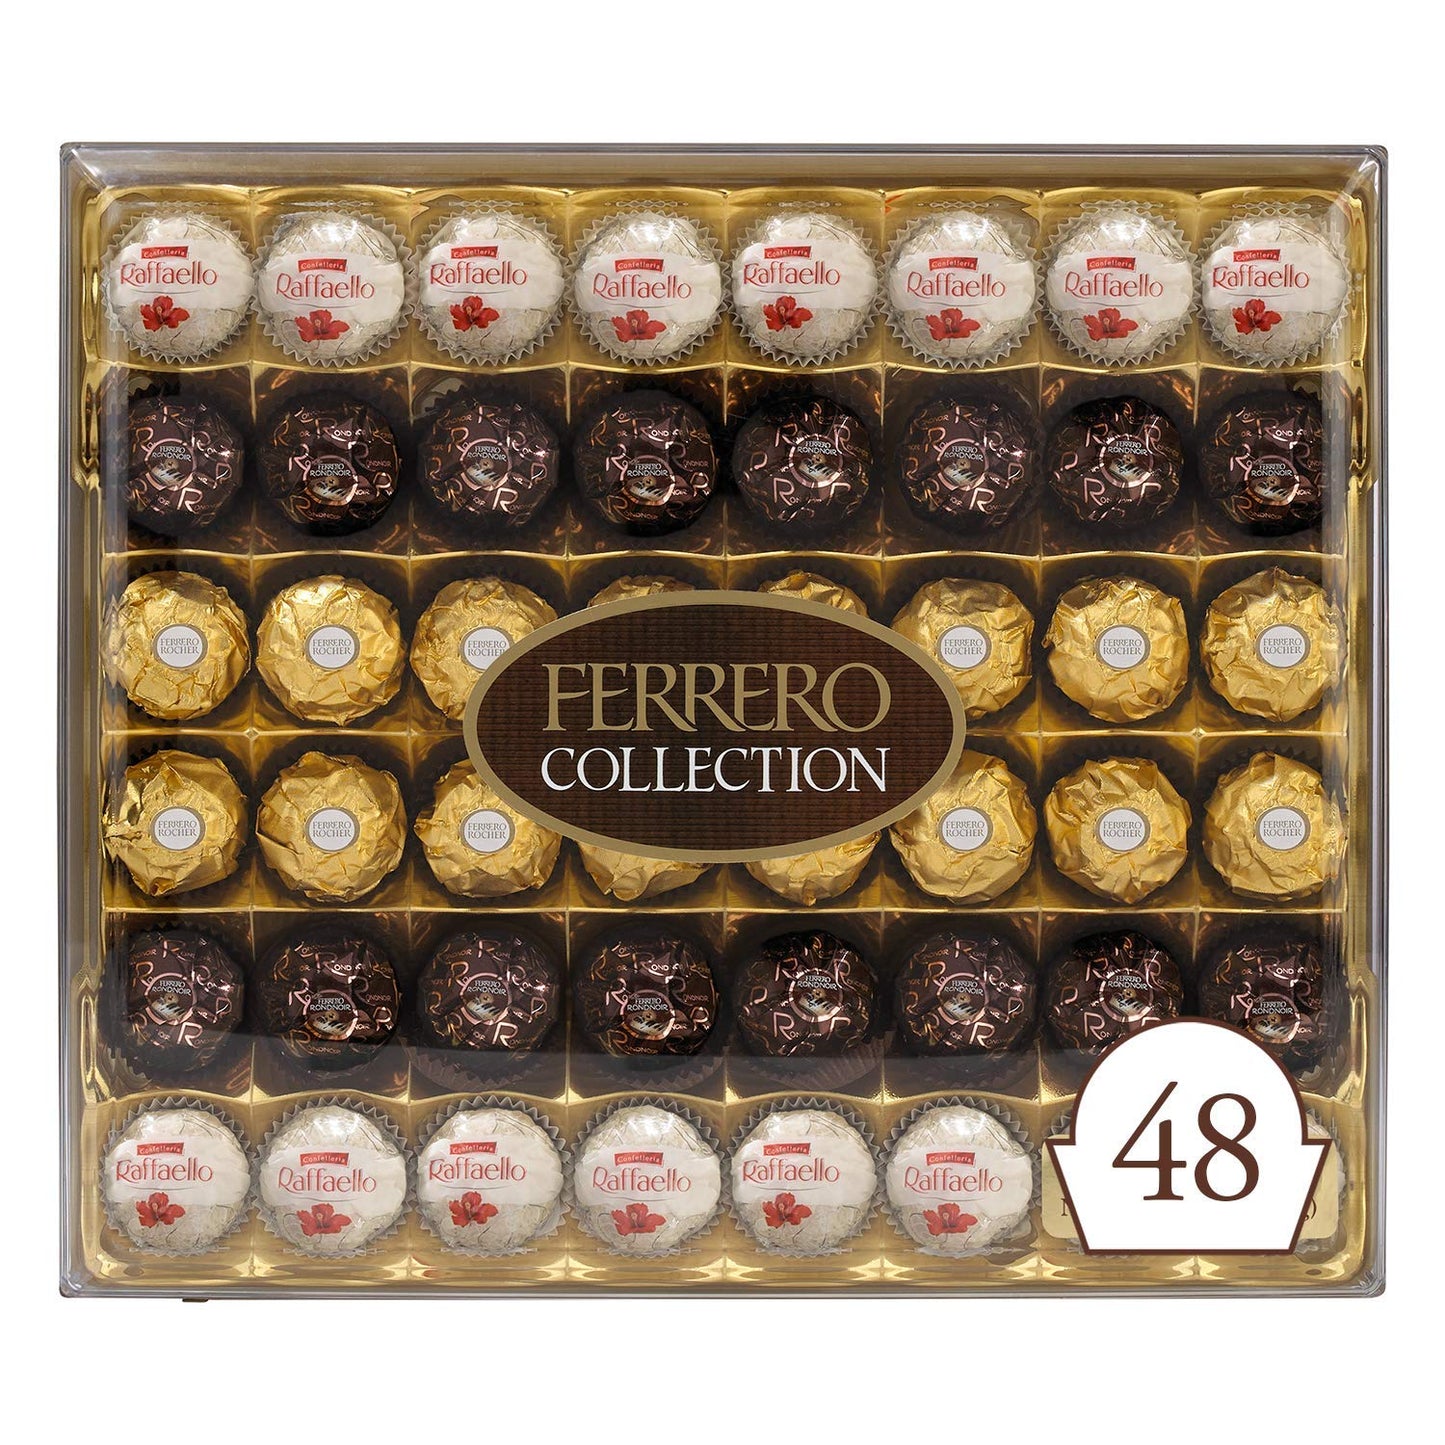 Ferrero Rocher Premium Milk Chocolate Hazelnut Bar Valentine's Day